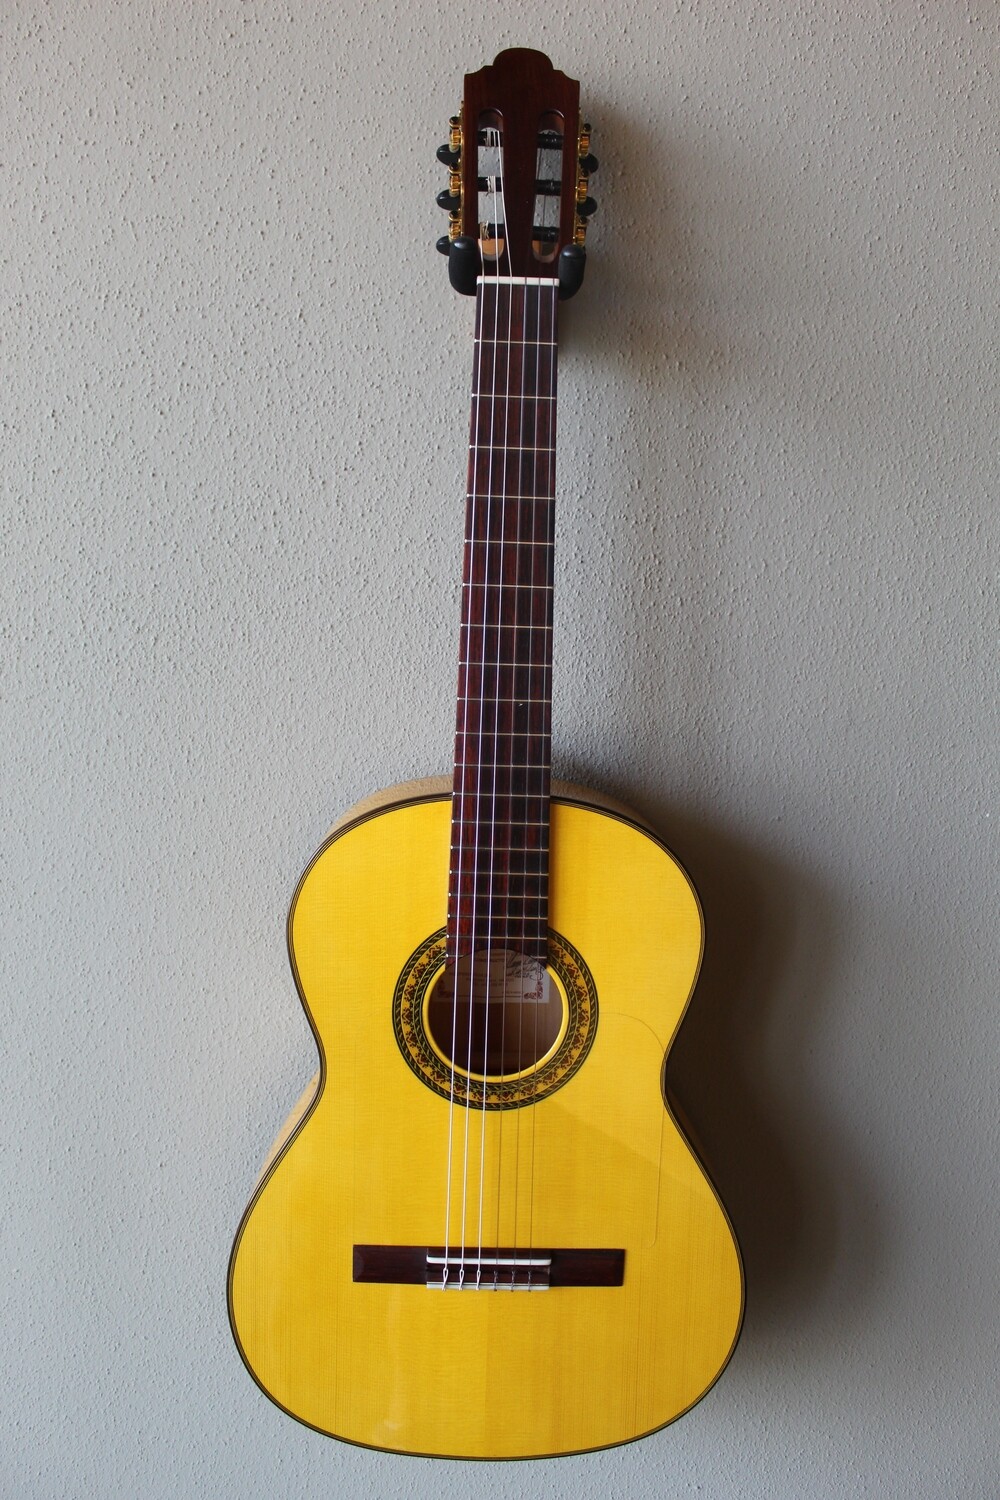 Marlon (Francisco) Navarro Flamenco Blanca Guitar - 630 Scale